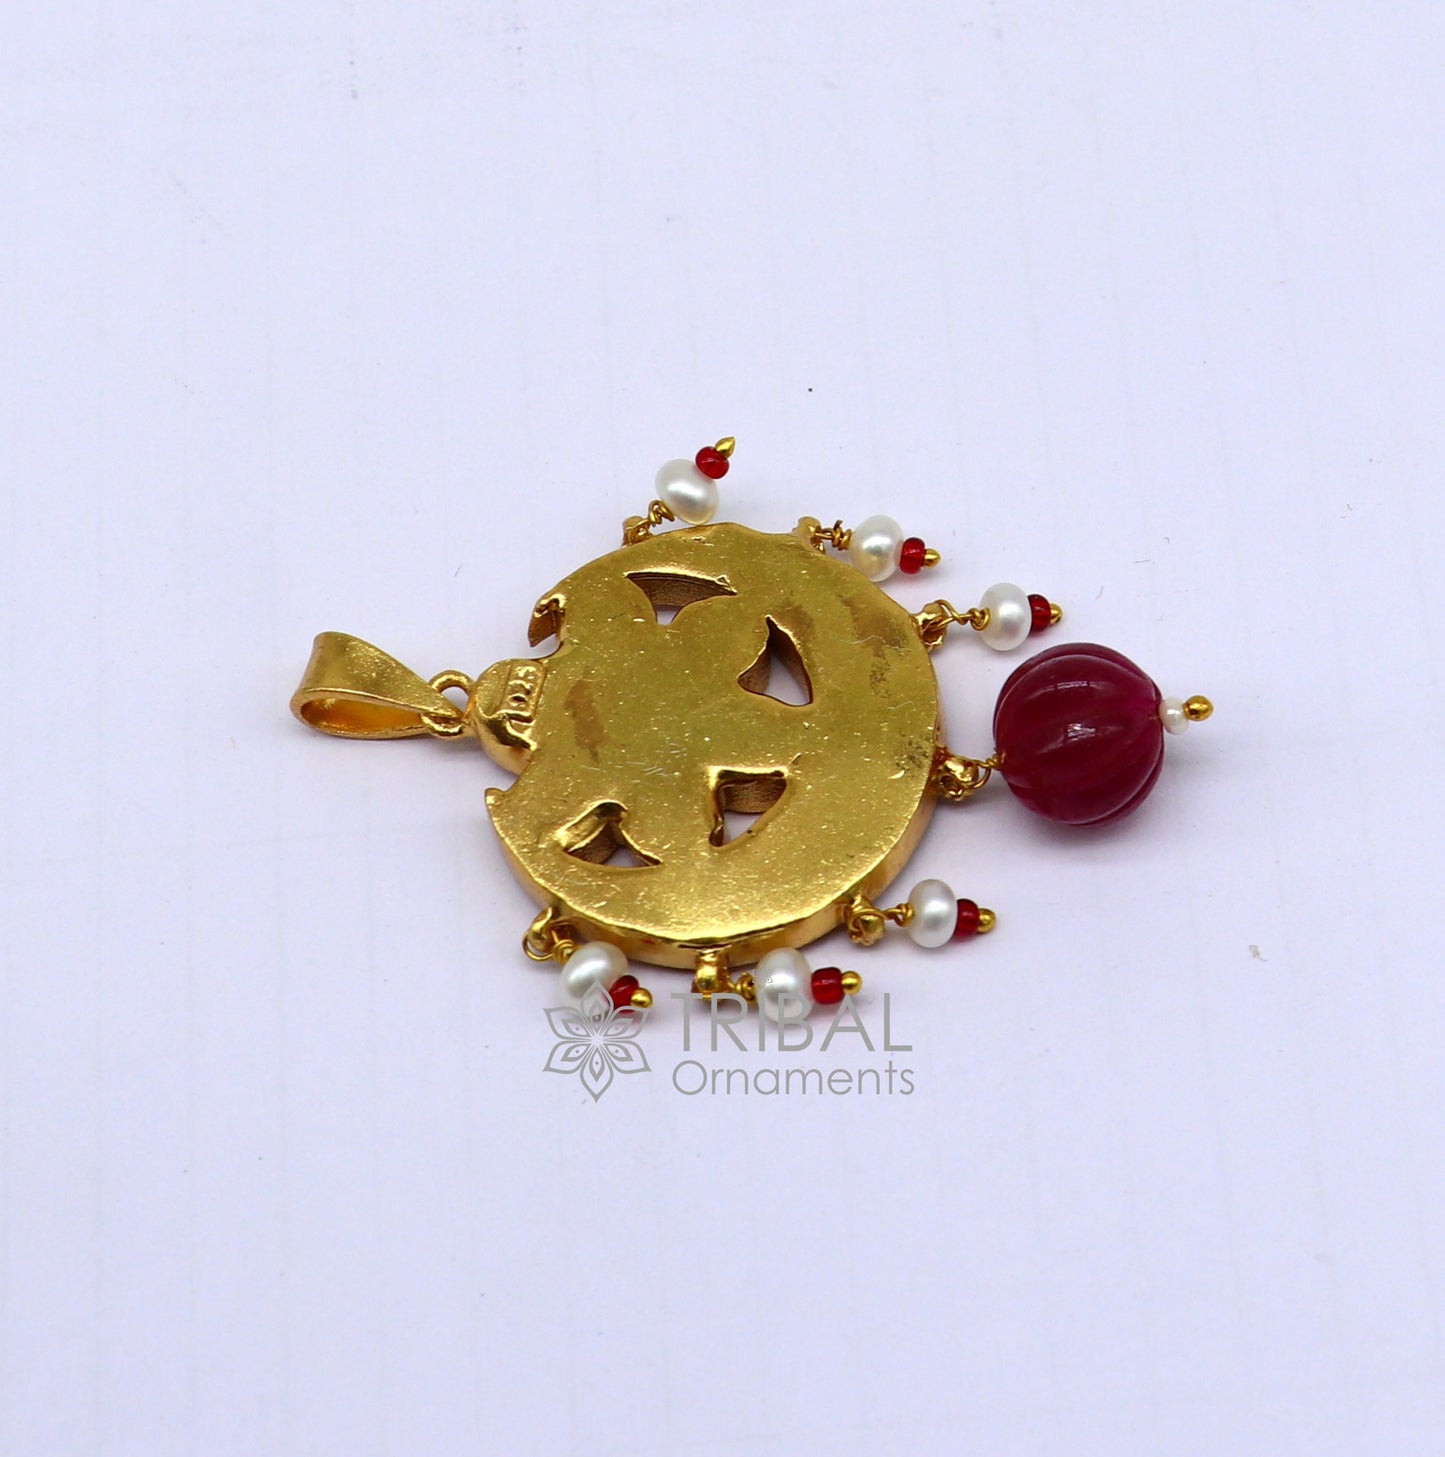 925 sterling silver gold polished moon design kundan work pendant, amazing stylish red color stone stylish trendy pendant best gift NSP627 - TRIBAL ORNAMENTS